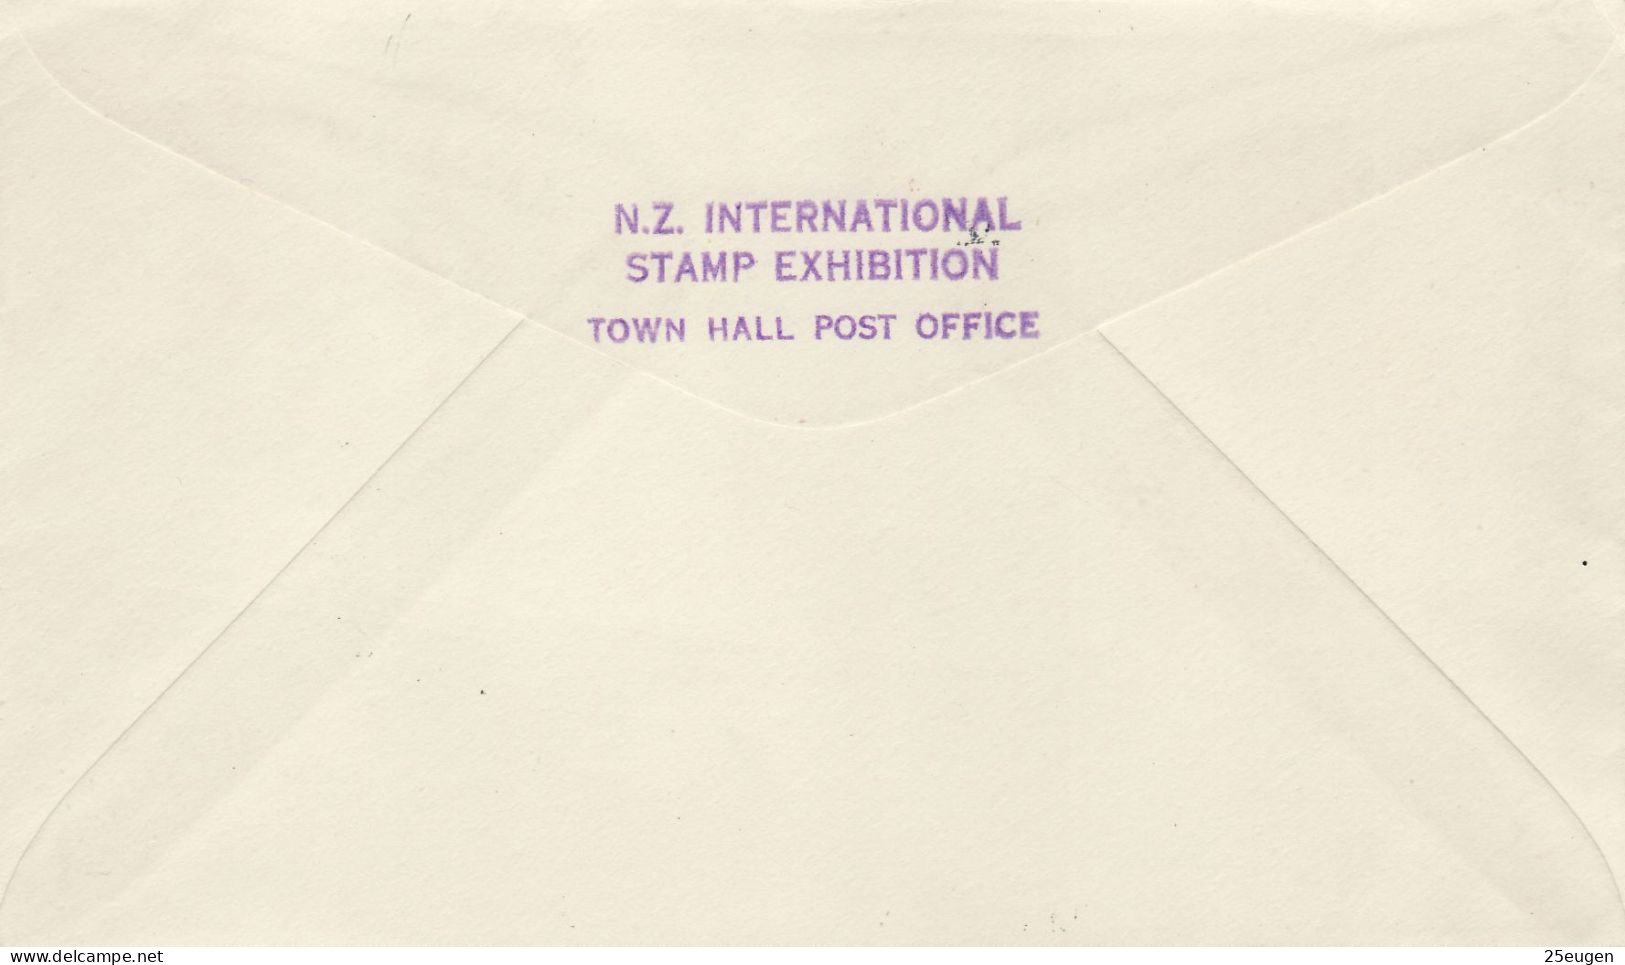 NEW ZEALAND 1955 STAMP EXHIBITION COMMEMORATIVE COVER - Briefe U. Dokumente